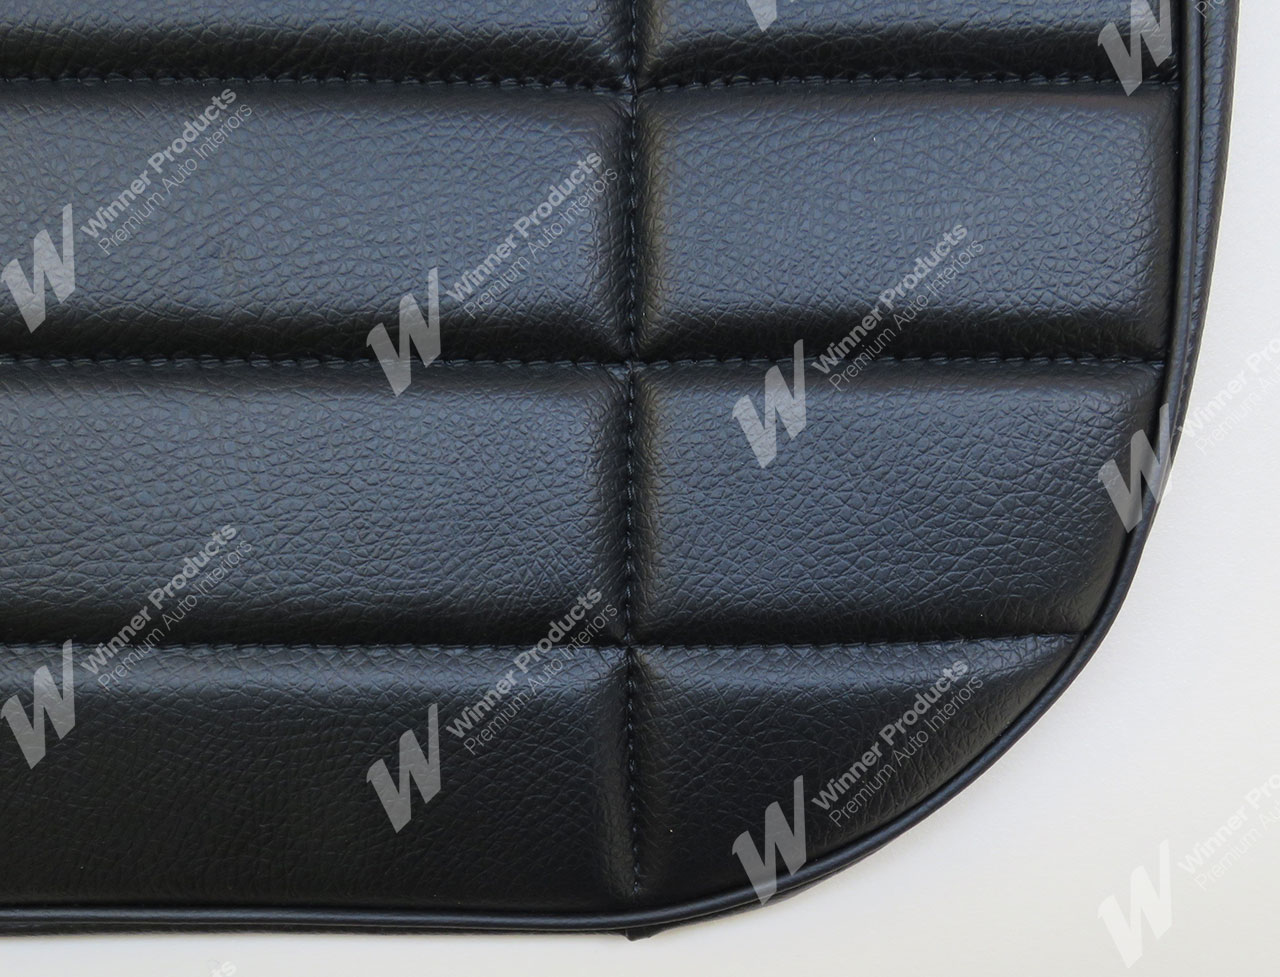 Holden Torana LC Torana GTR Coupe 40X Black Seat Covers (Image 4 of 4)